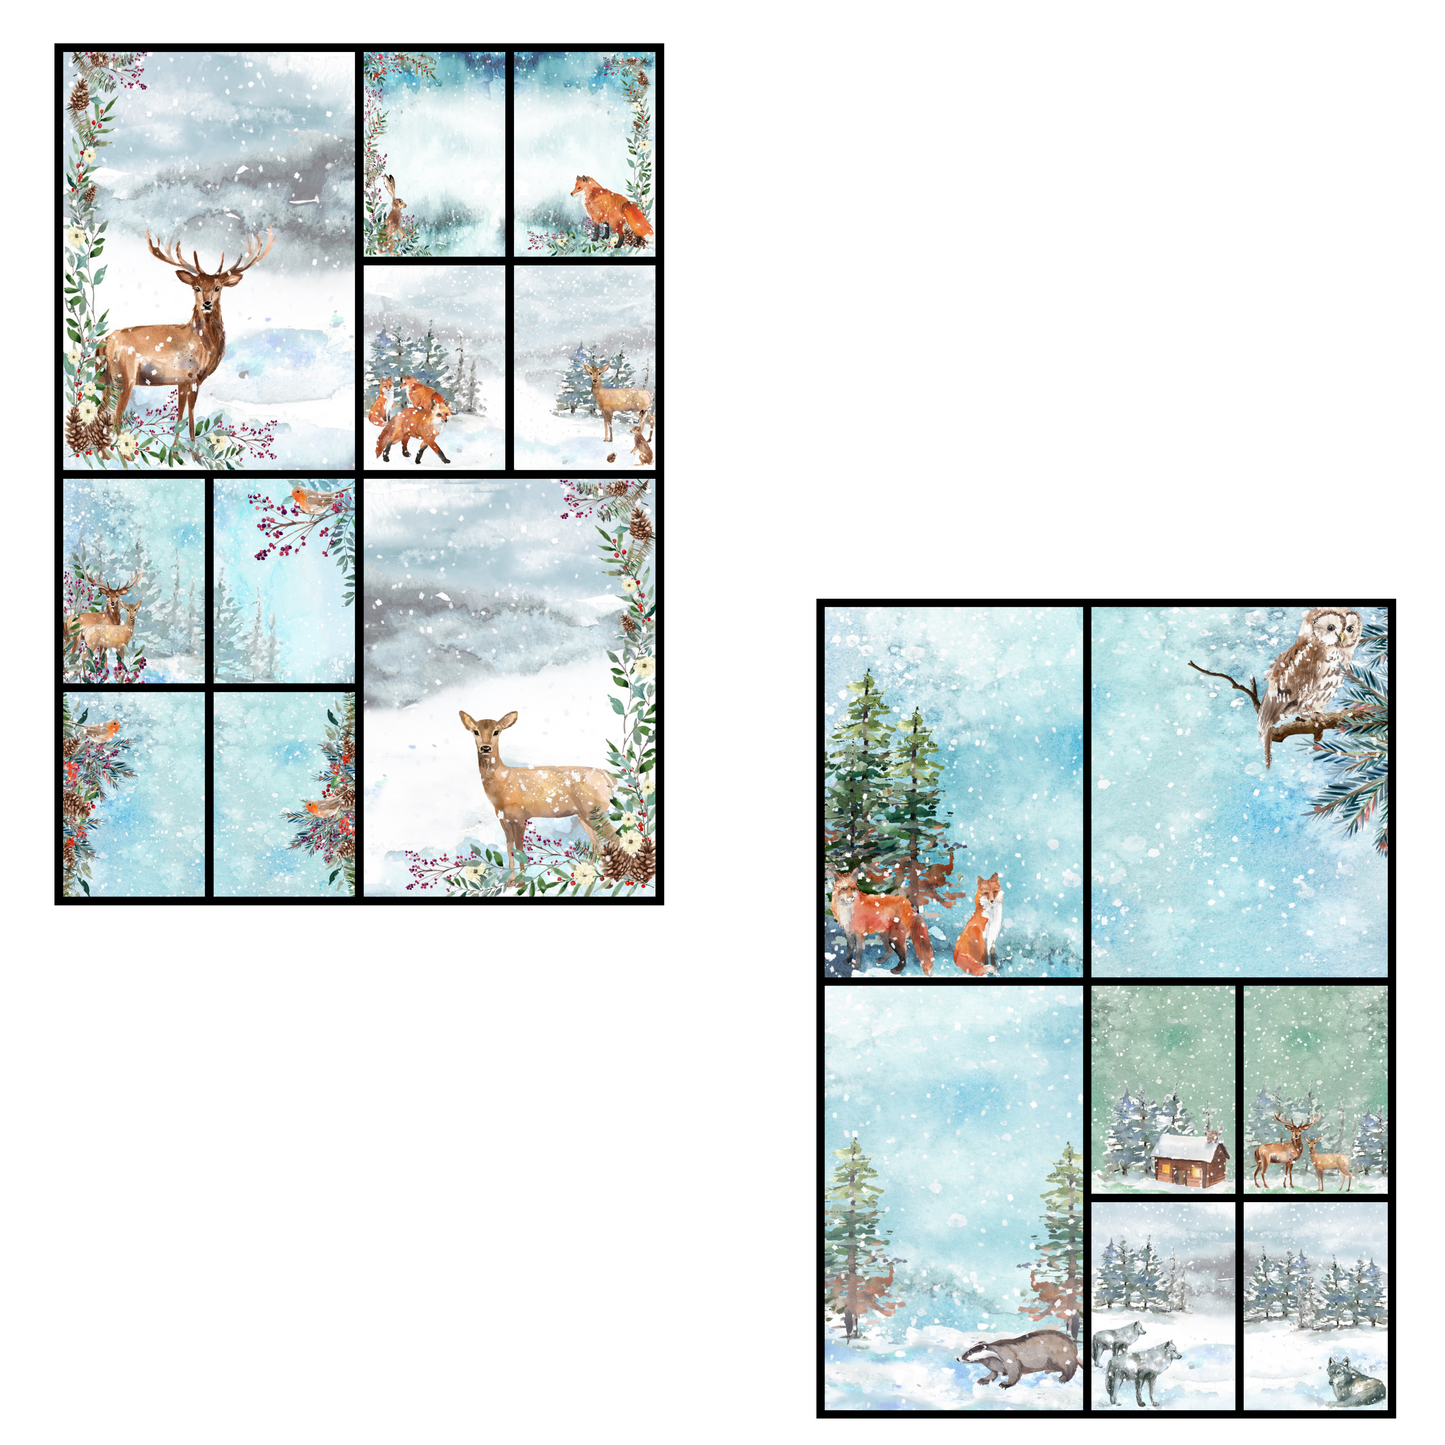 Winter Wonderland Papercraft Collection